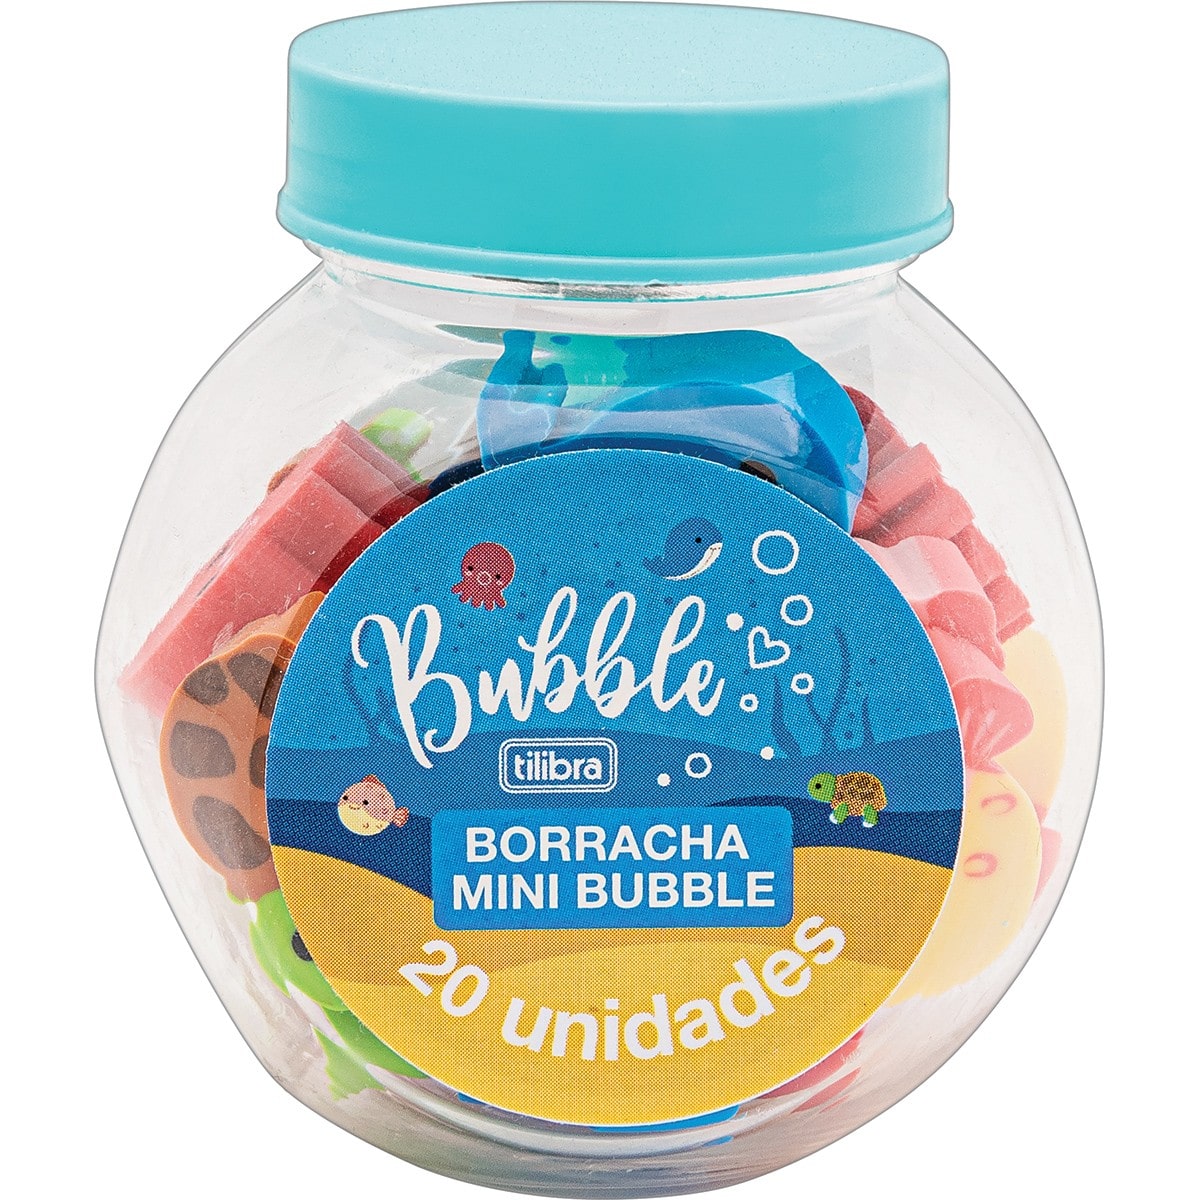 Borracha - Tilibra - Mini Bubble 20 unidades